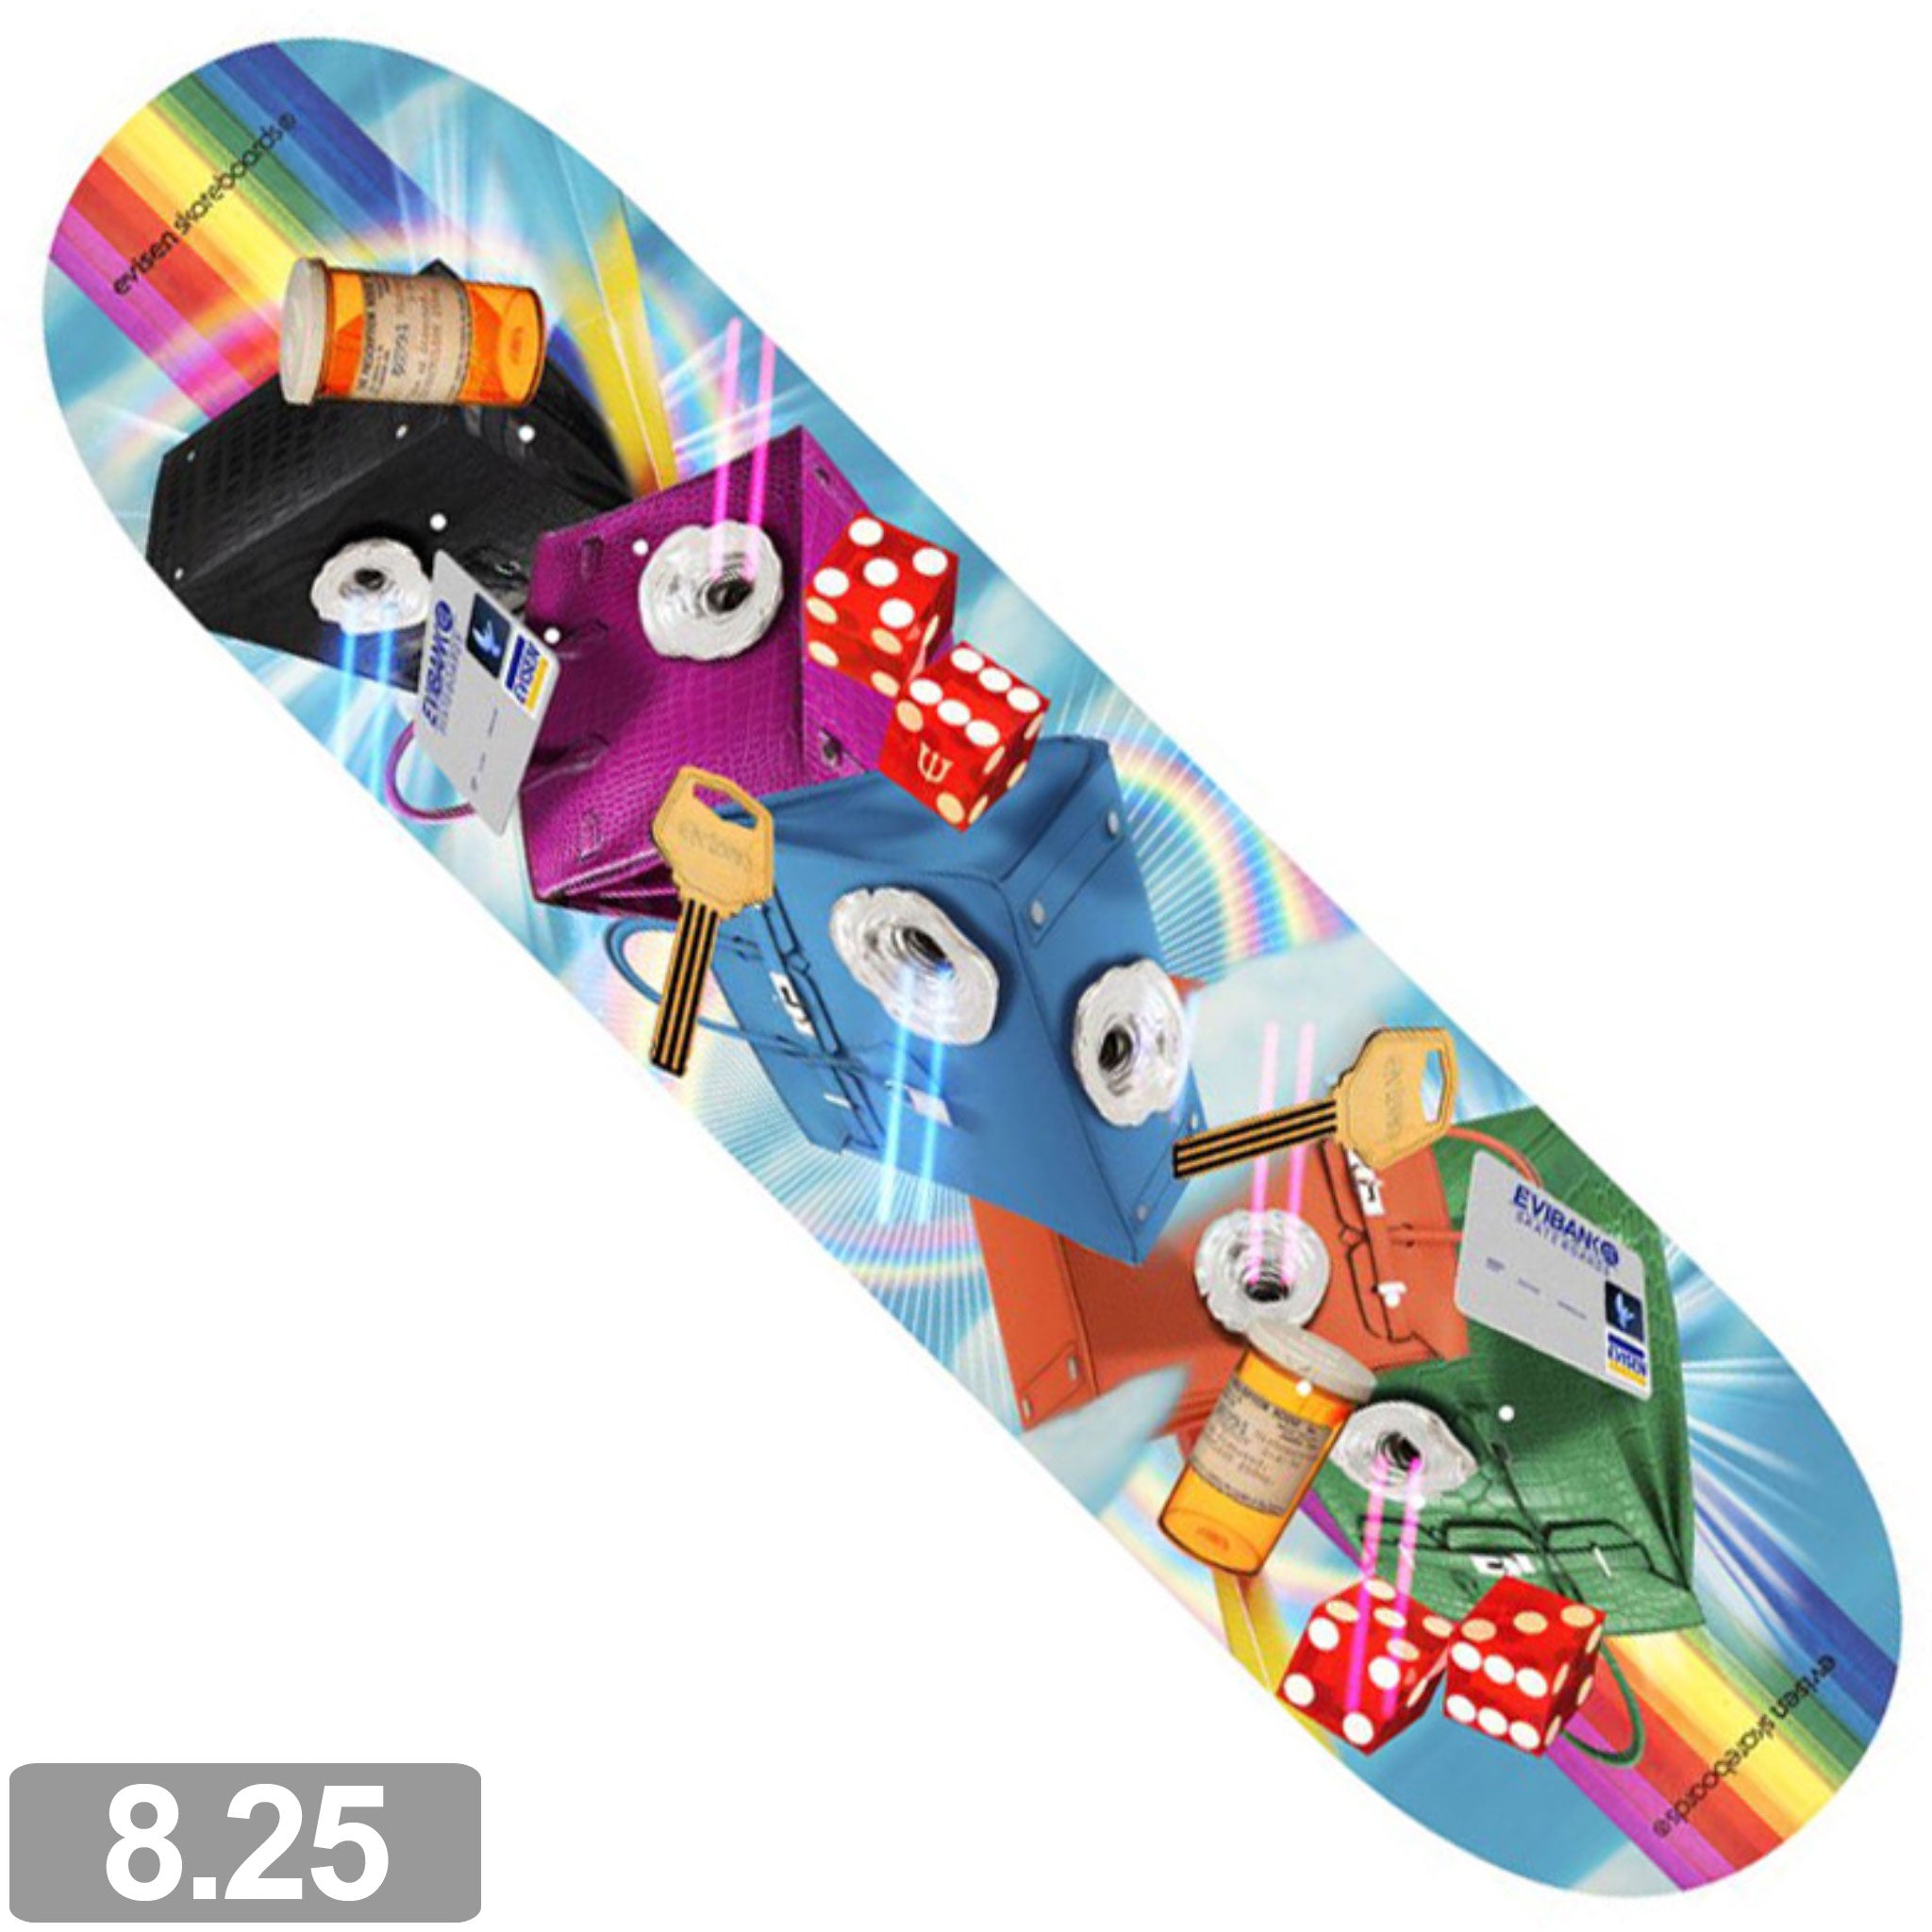 Evisen Skateboards デッキ 8.25 - スケートボード